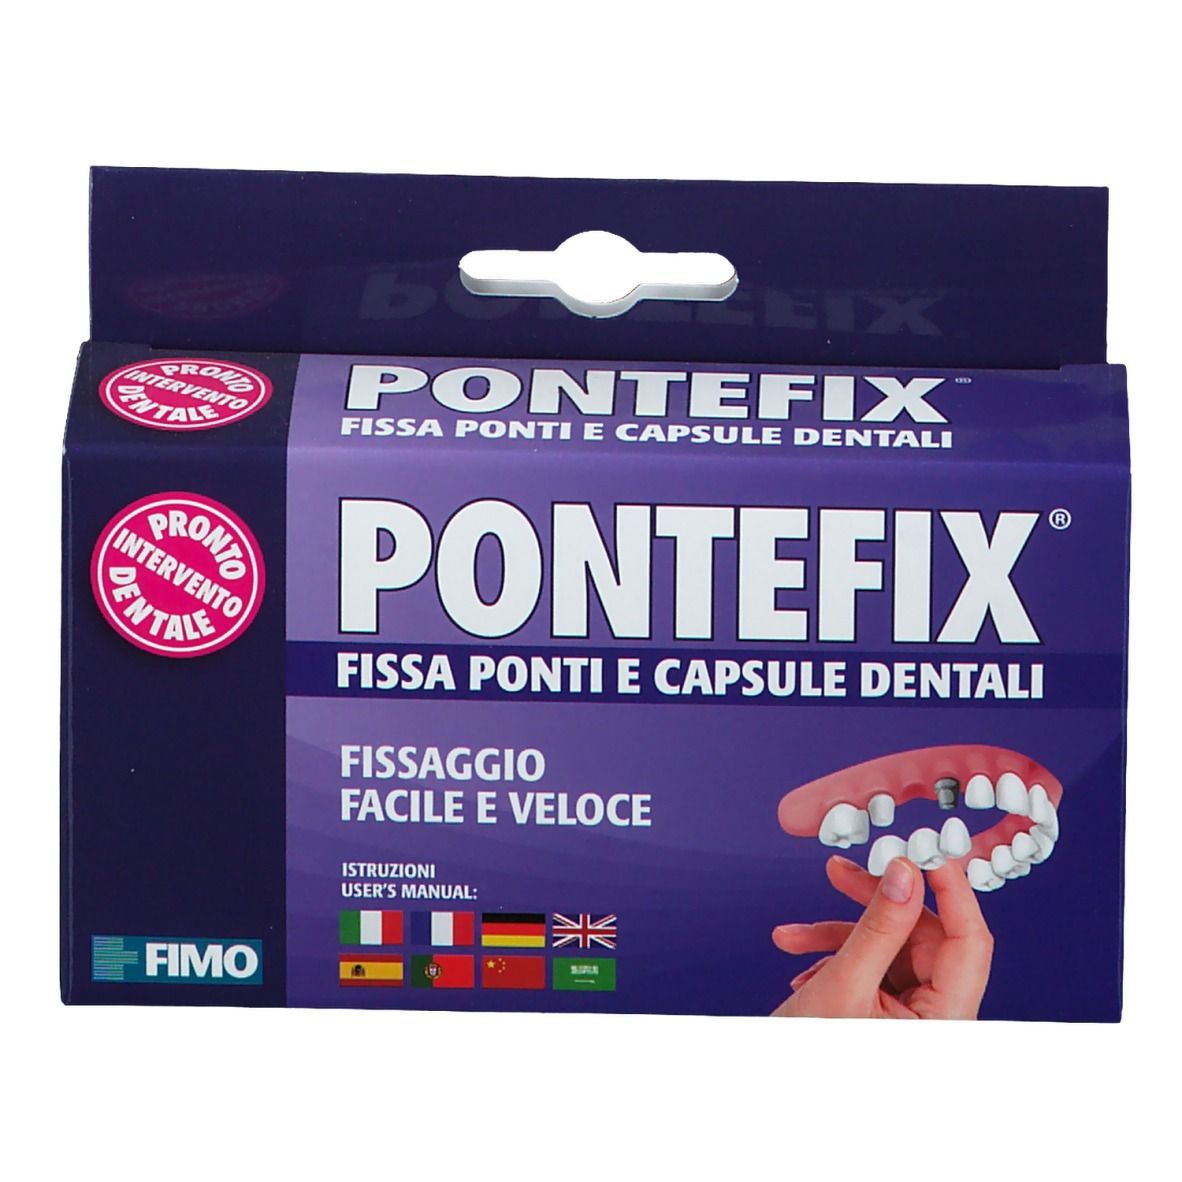 Pontefix® Fissa Ponti e Capsule Dentali Kit Completo